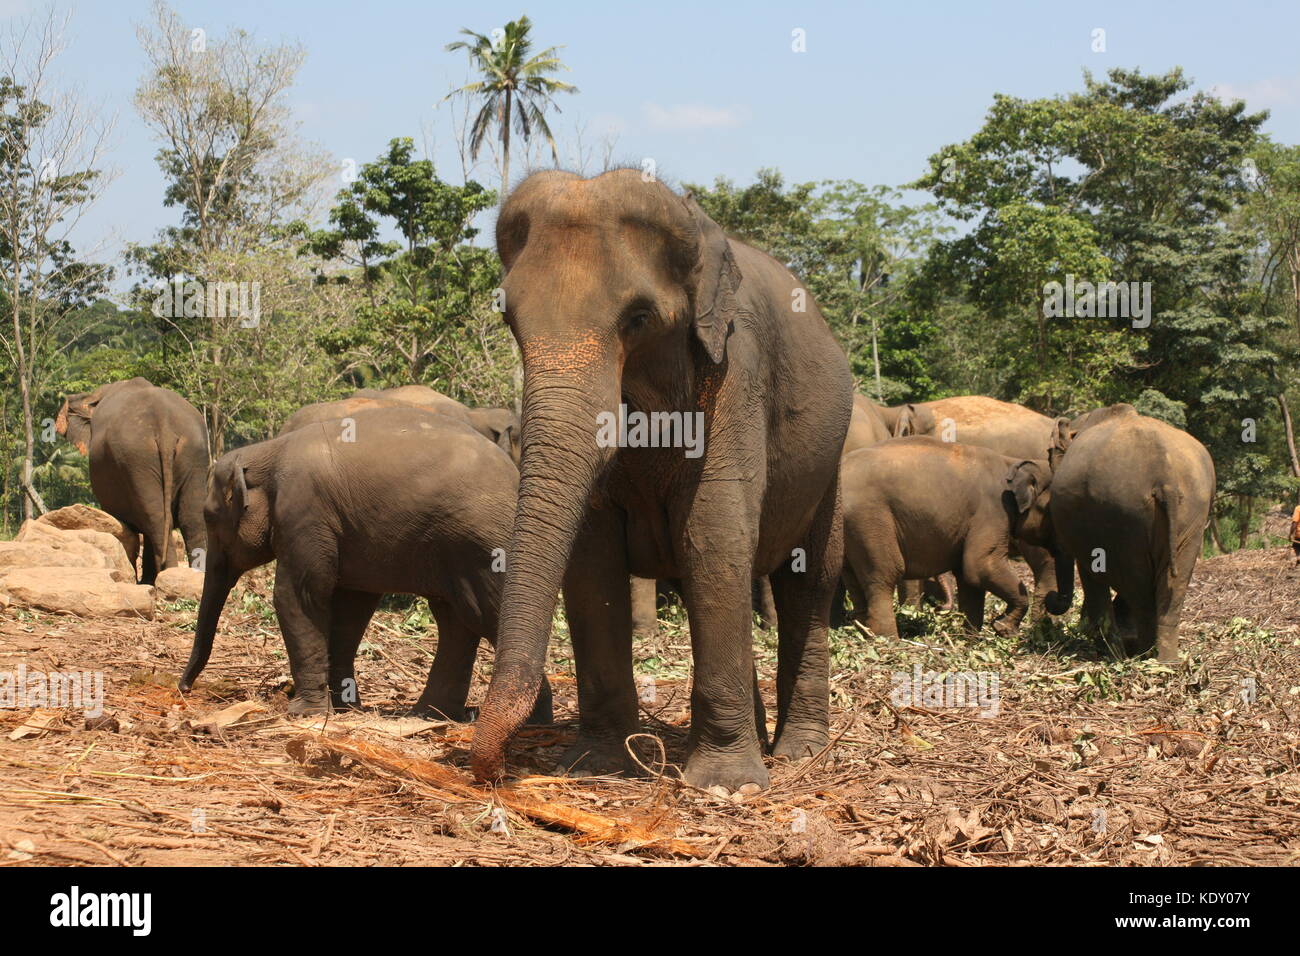 Elefanten Wausenhaus in pinnawella - sri lanka - Elefant Hostpital Stock Photo